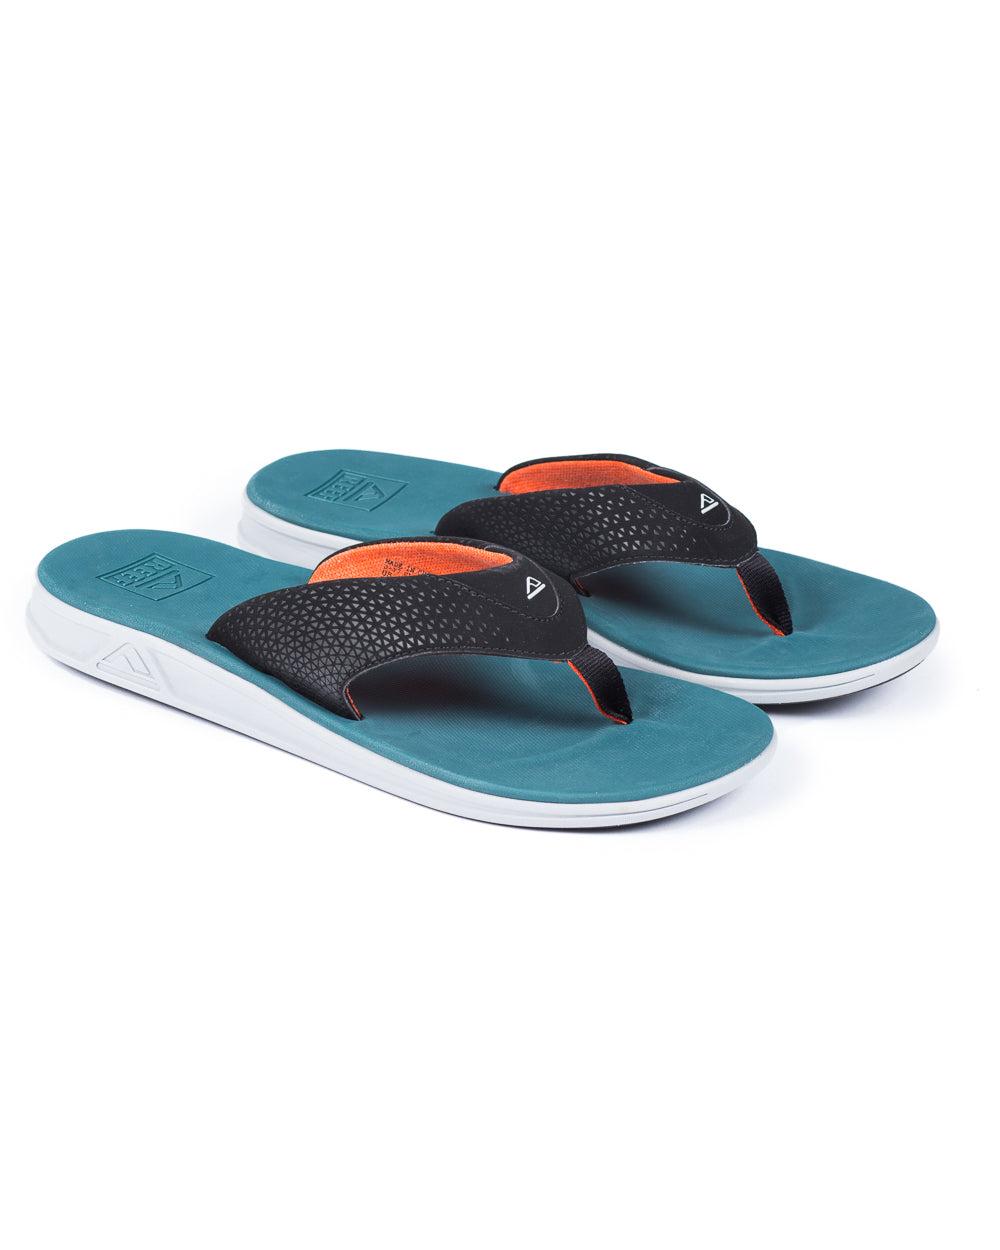 Reef Rover Flip Flops (blue/grey/orange)